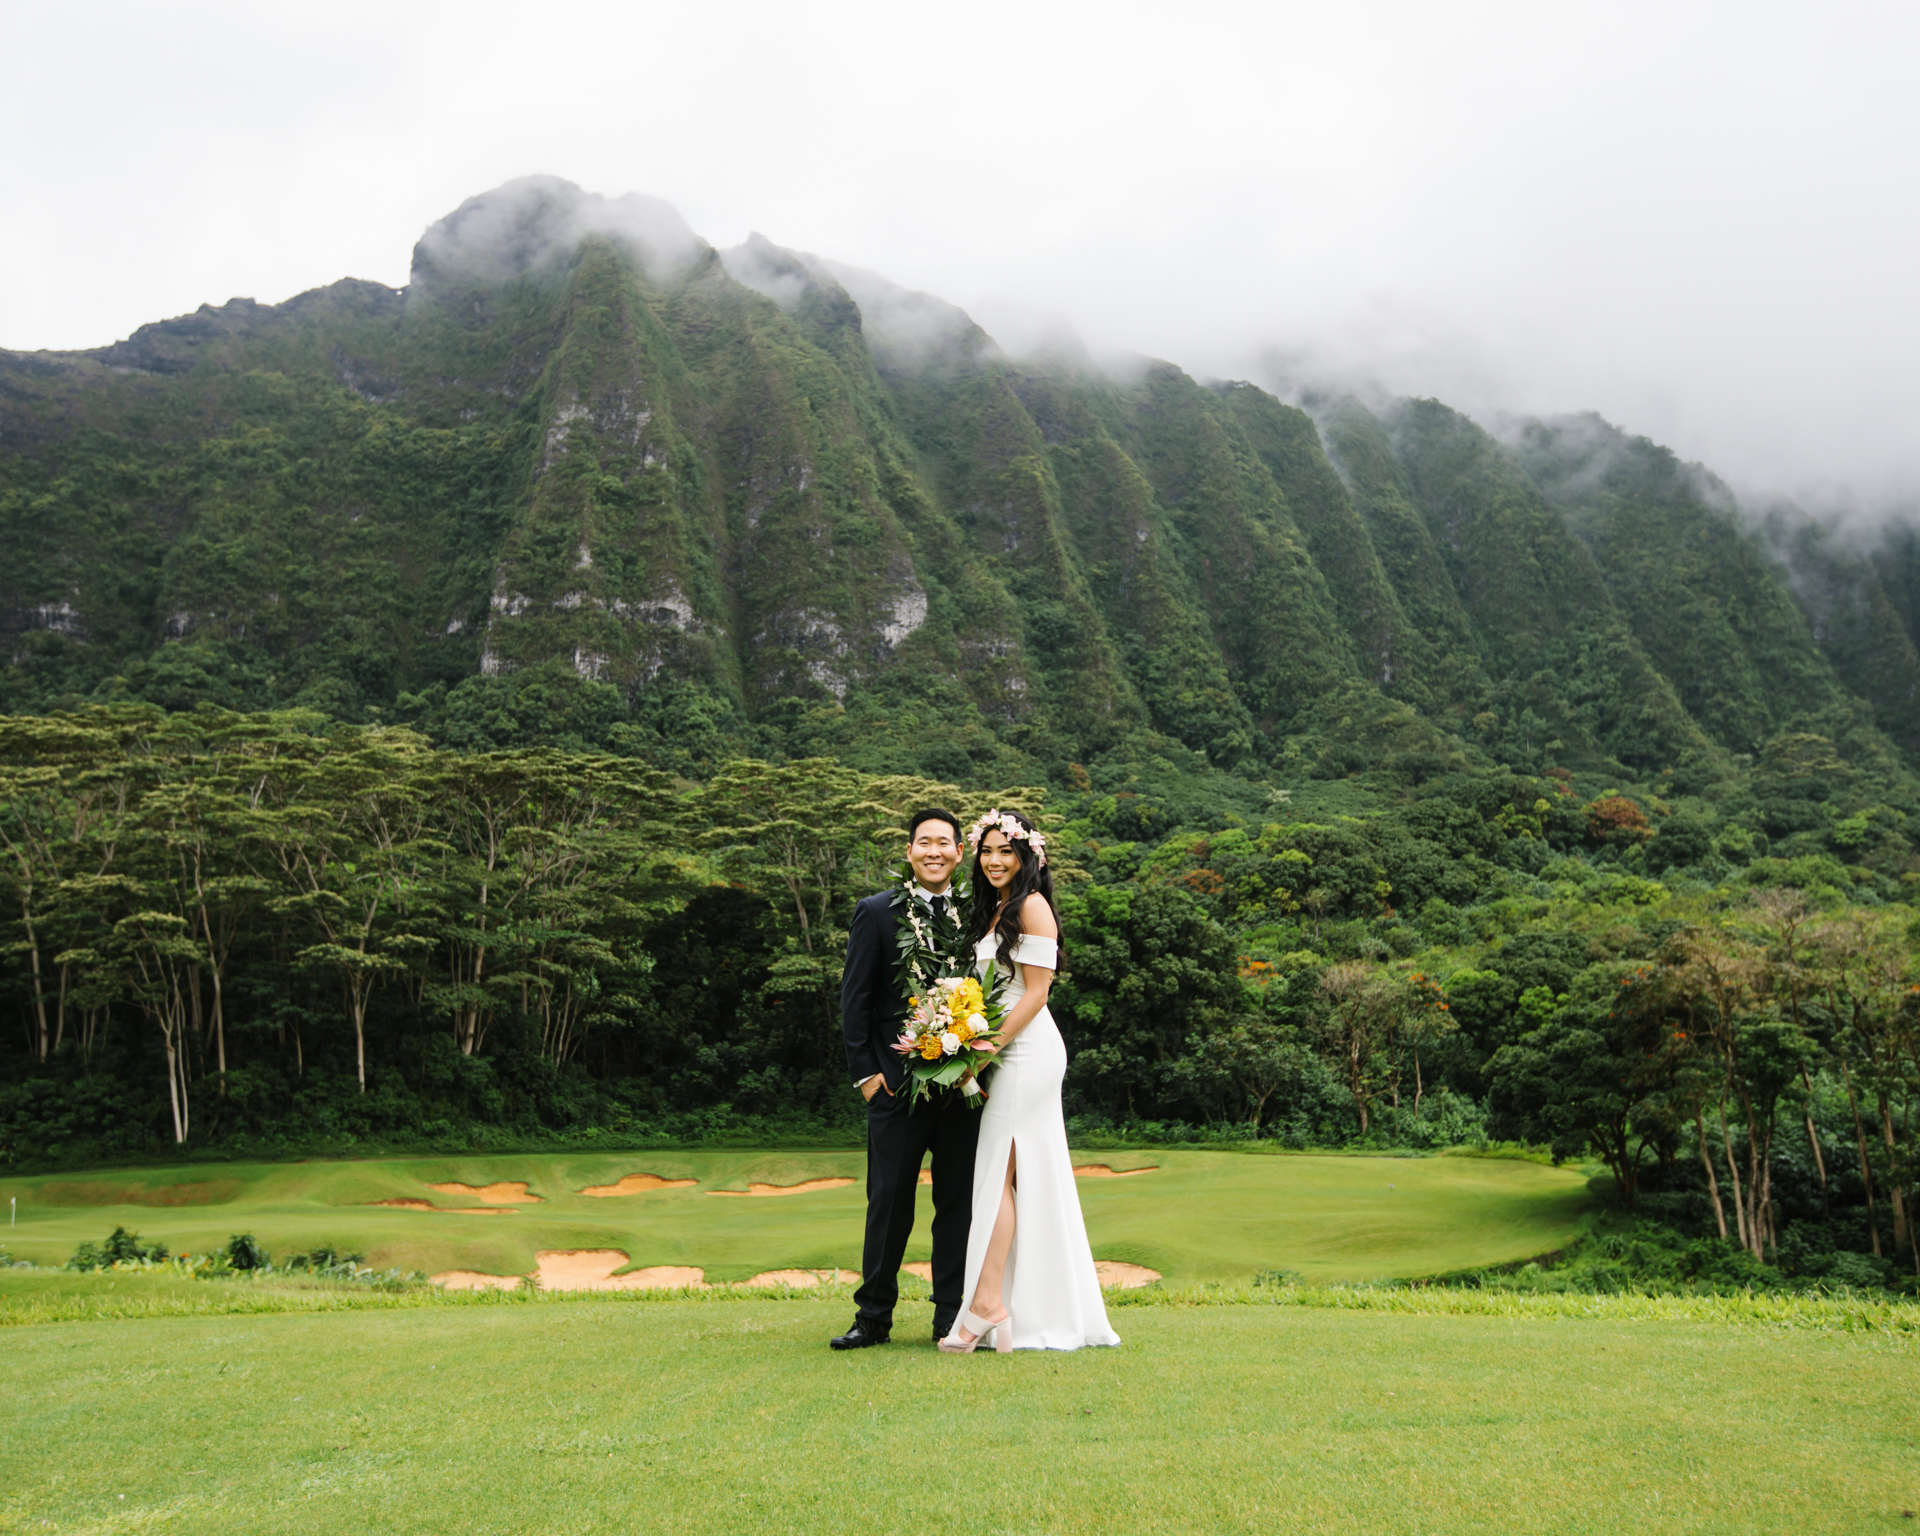 LisaandColin_Instagram-28 Lisa and Colin's Wedding at Ko'olau on O'ahu